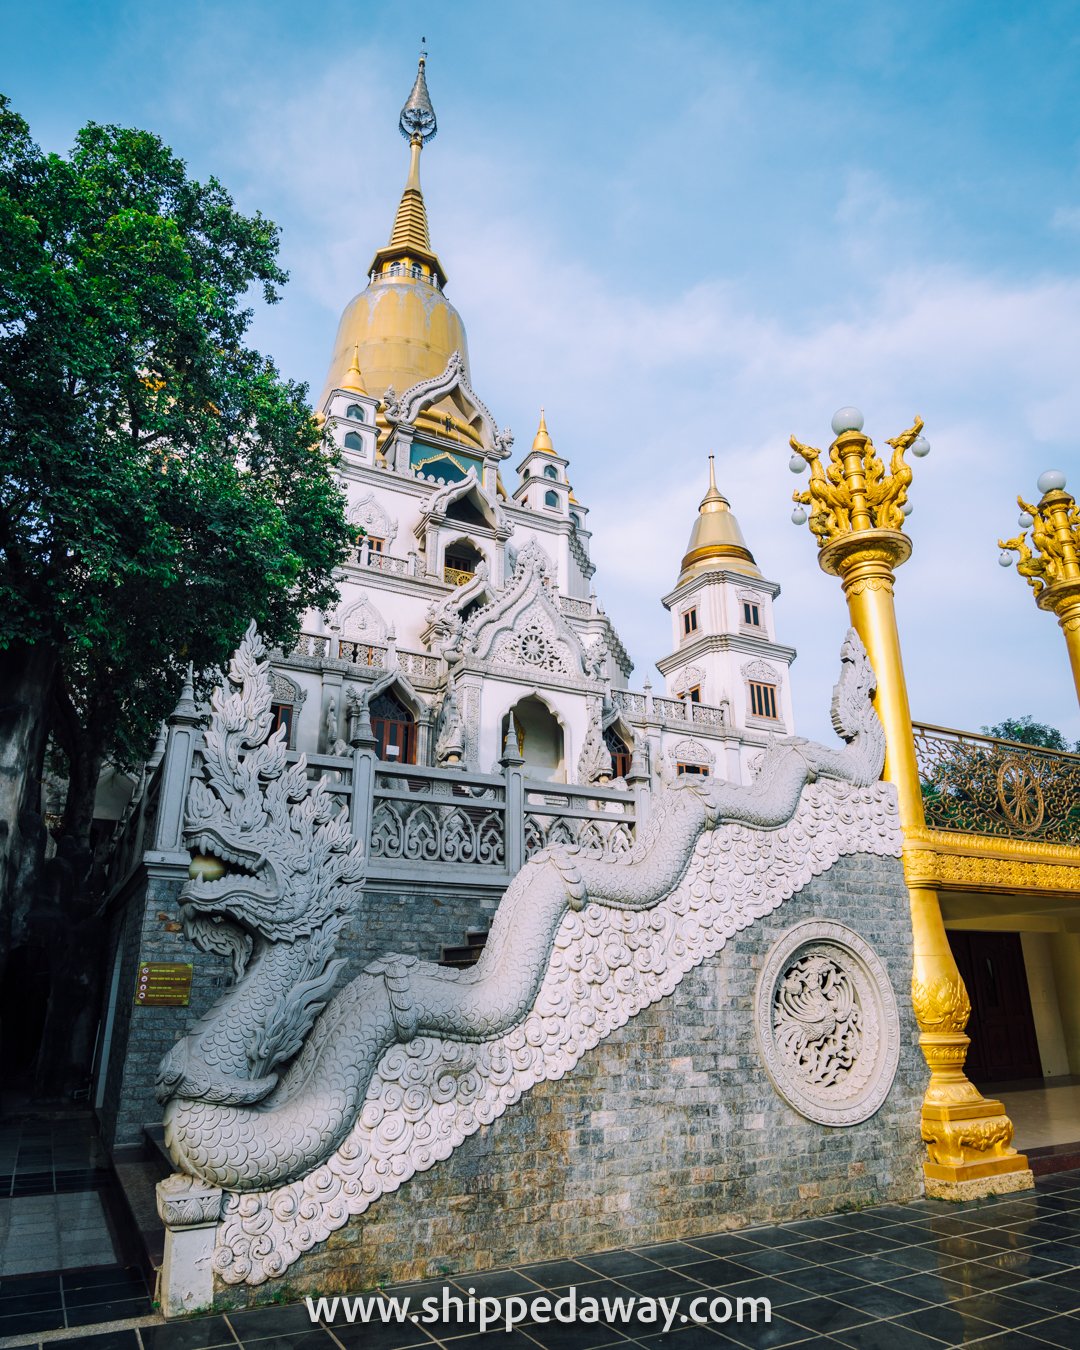 Architecture of Buu Long Pagoda in Saigon